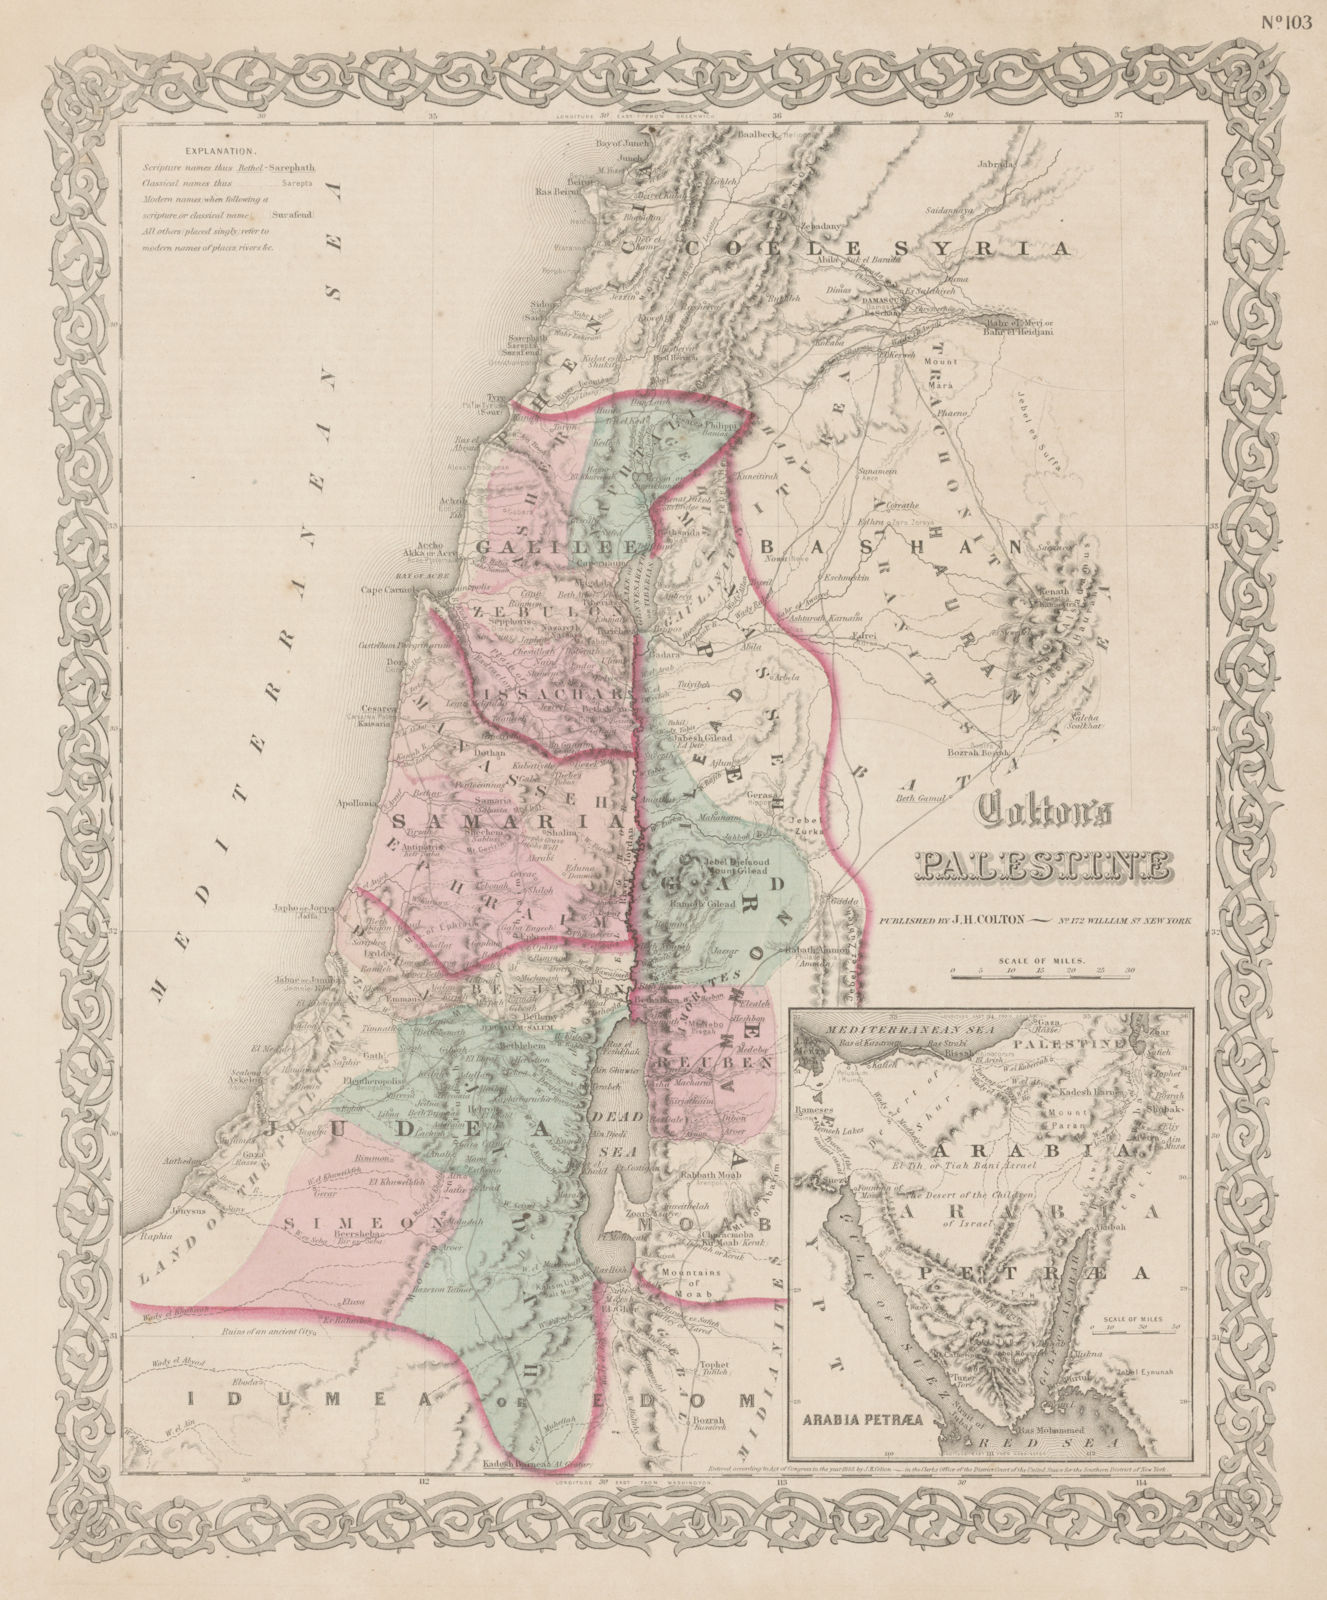 "Colton's Palestine". Israel. Biblical classical & modern names. Sinai 1863 map